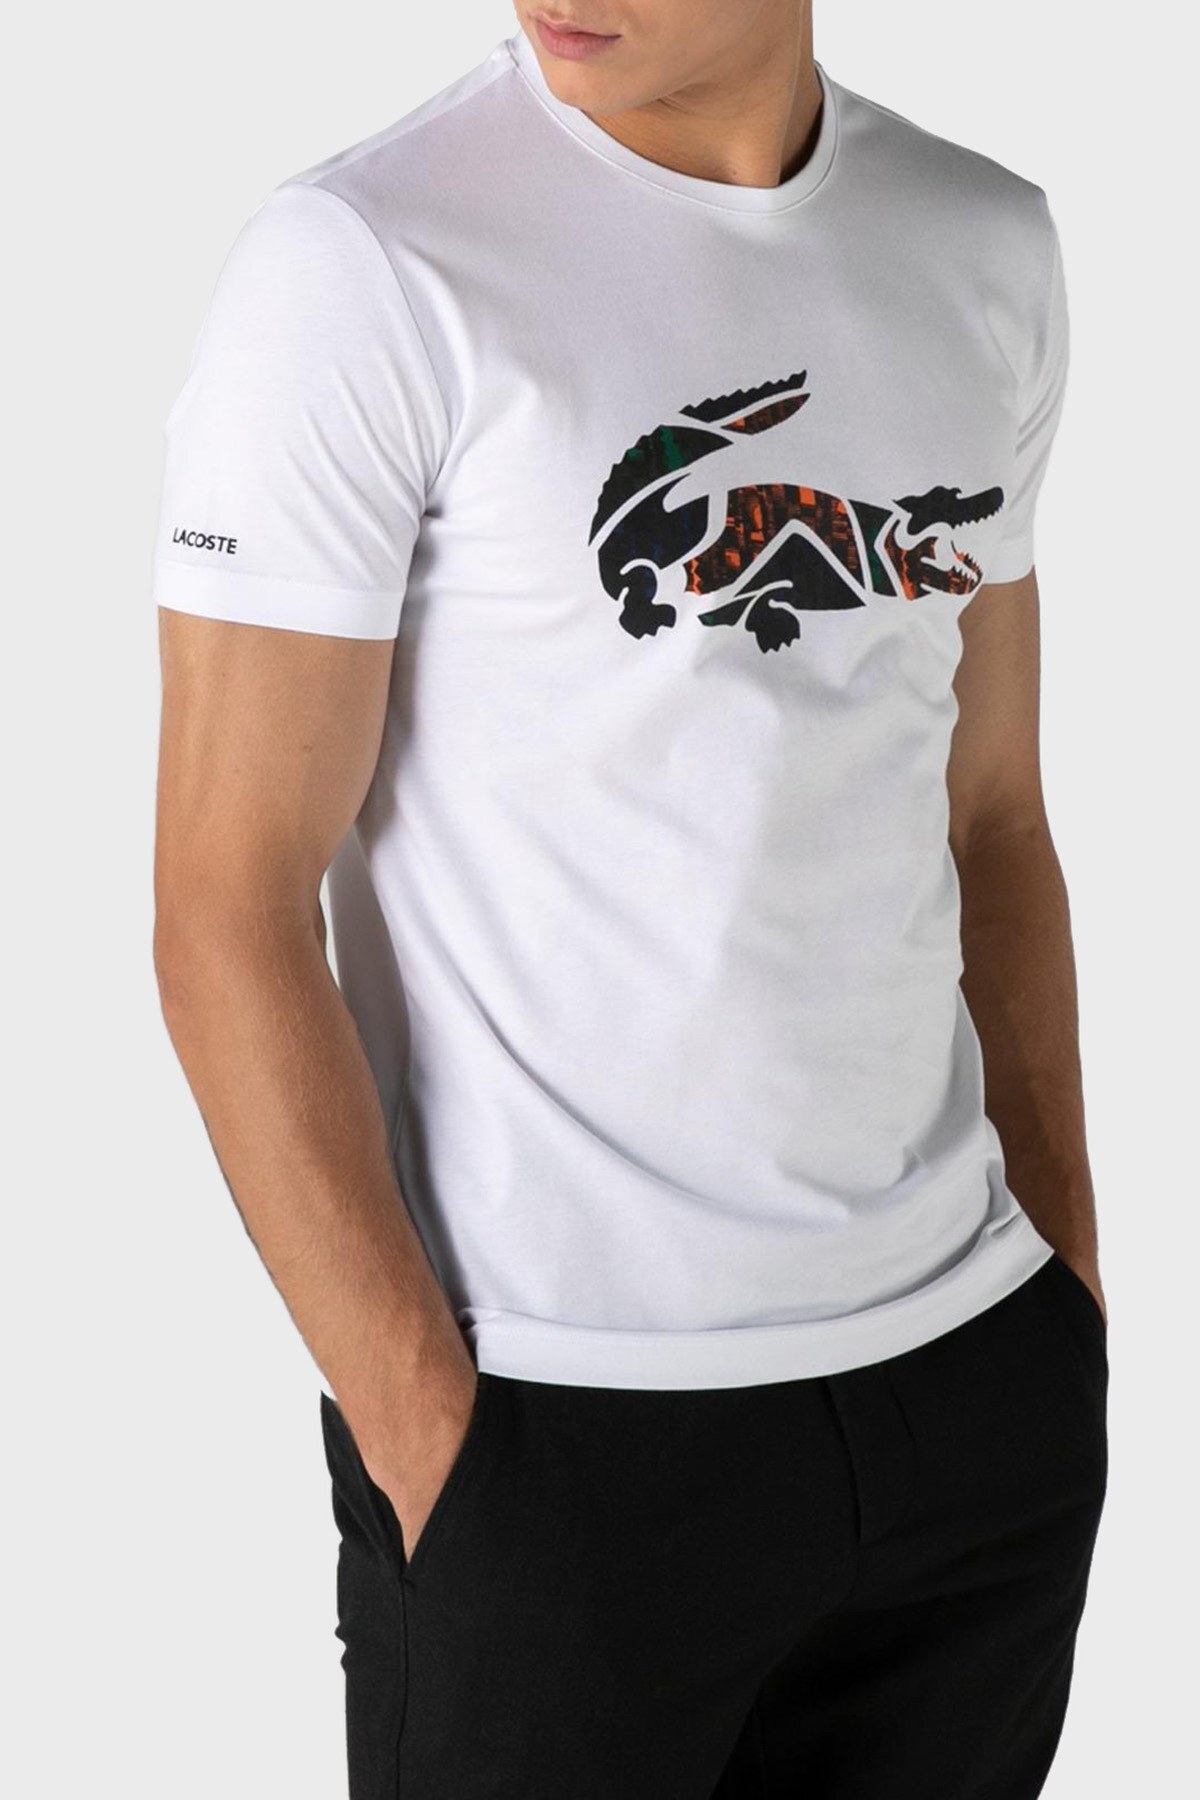 Lacoste Logo Baskılı % 100 Pamuk Slim Fit Erkek T Shirt TH2207 07B BEYAZ